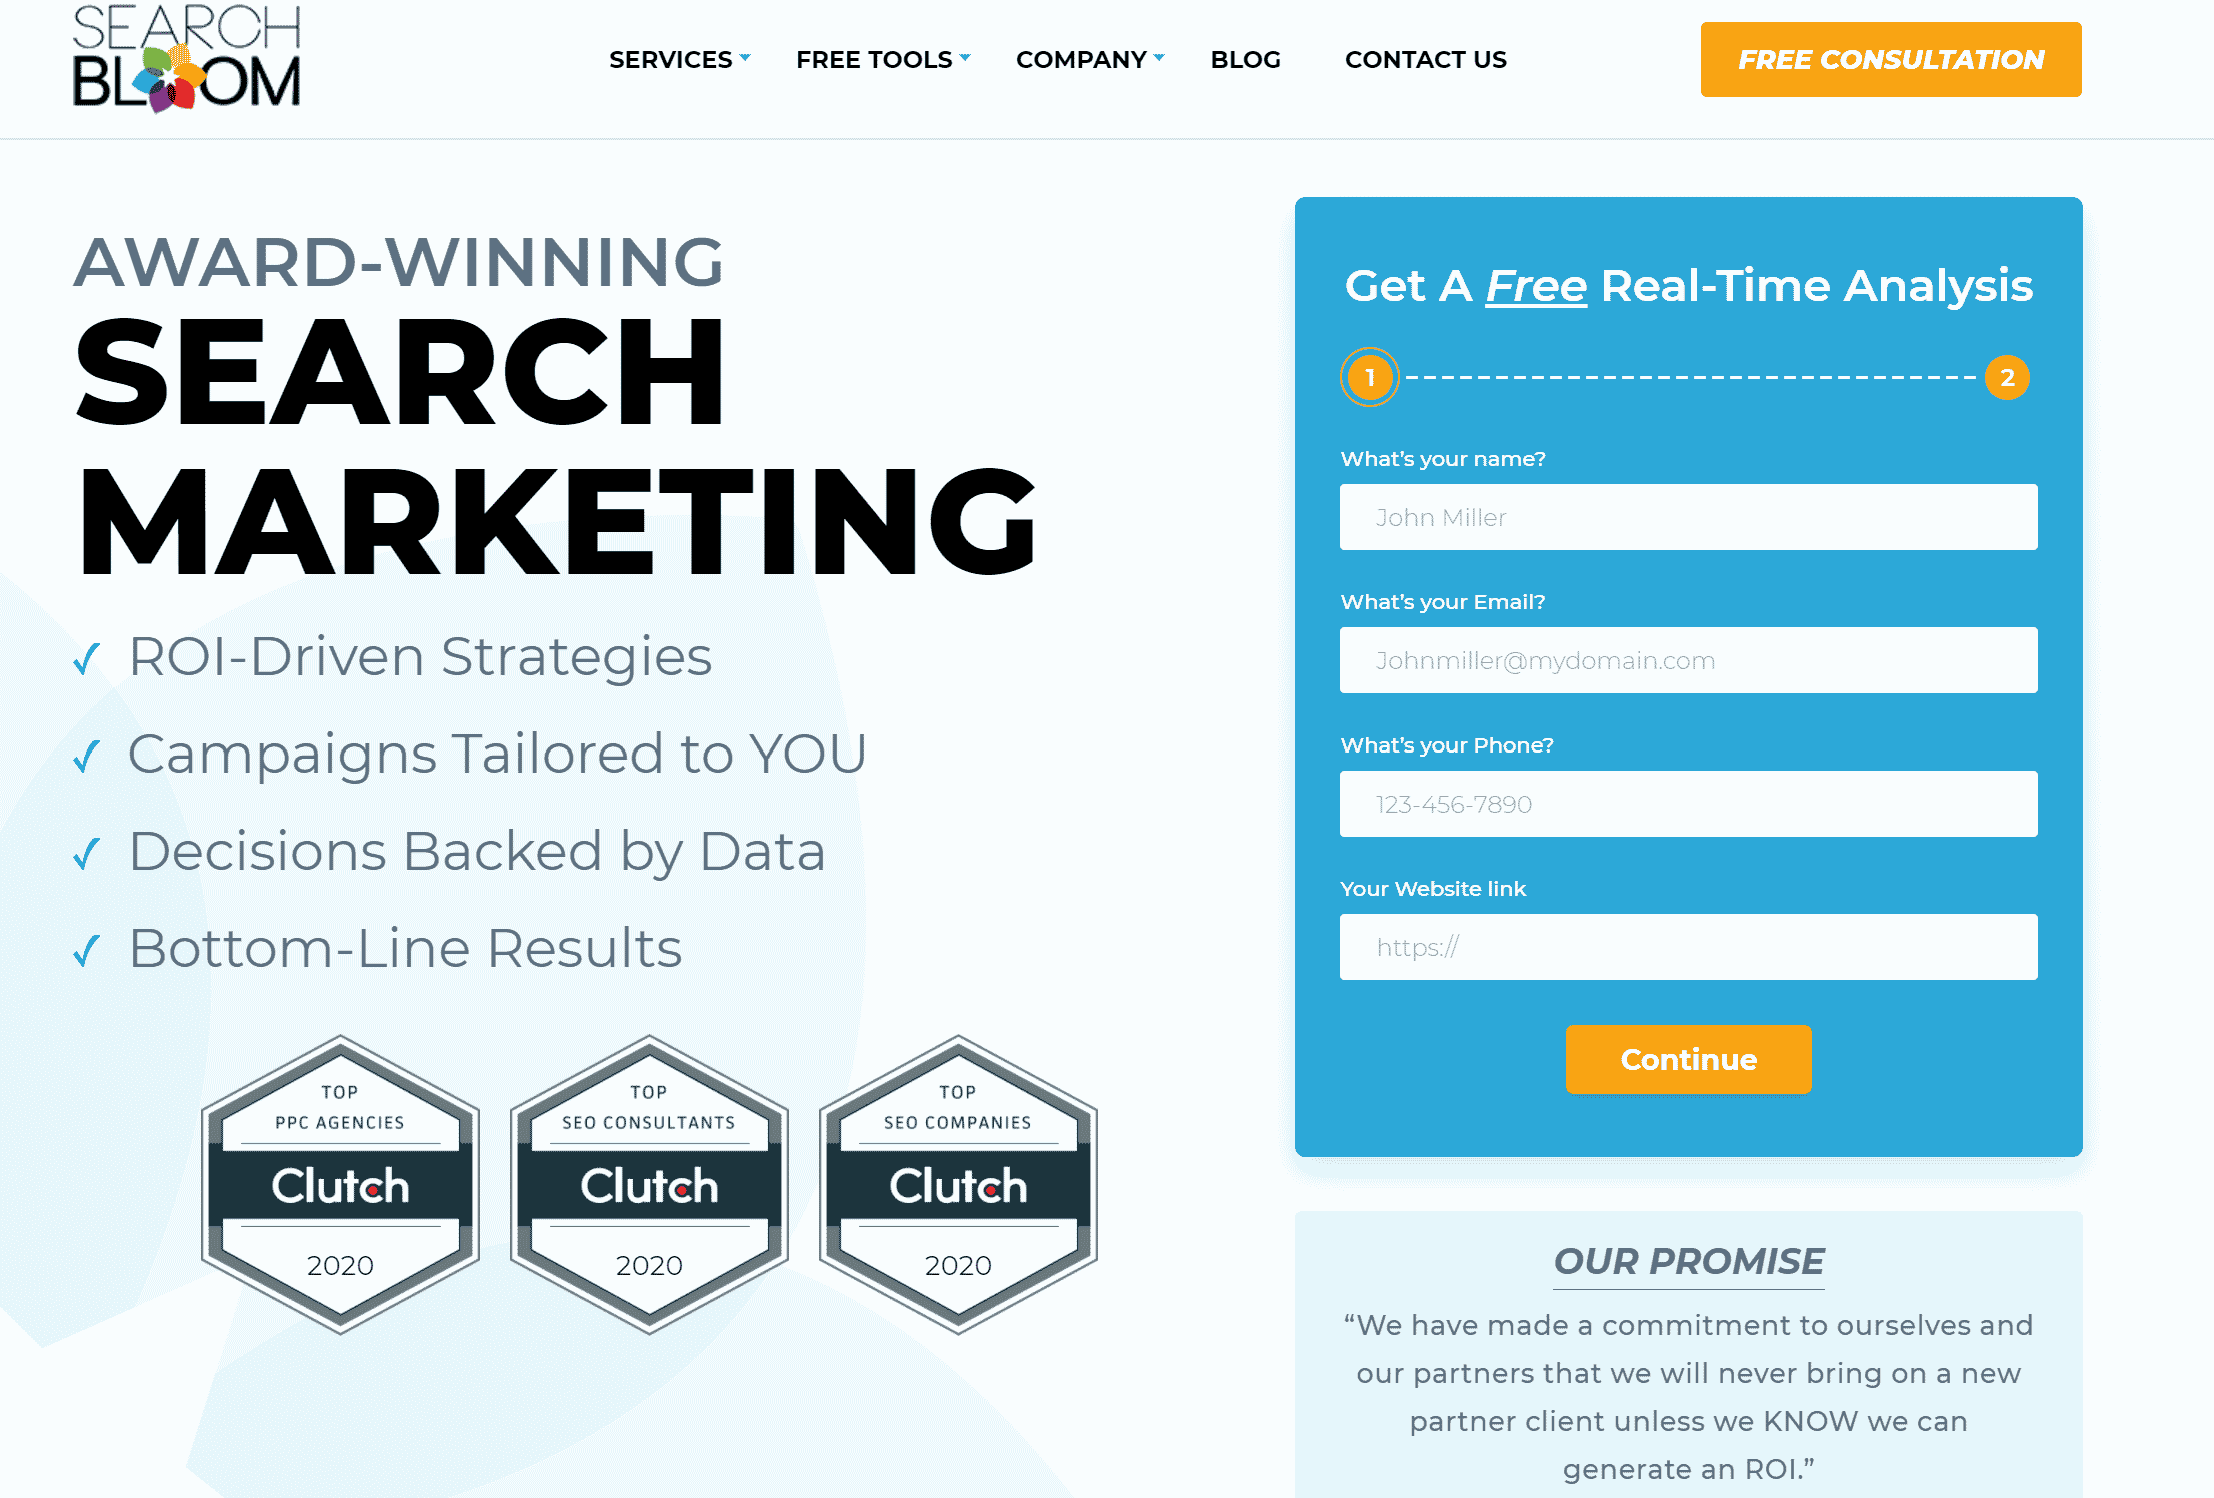 Search Bloom website homepage